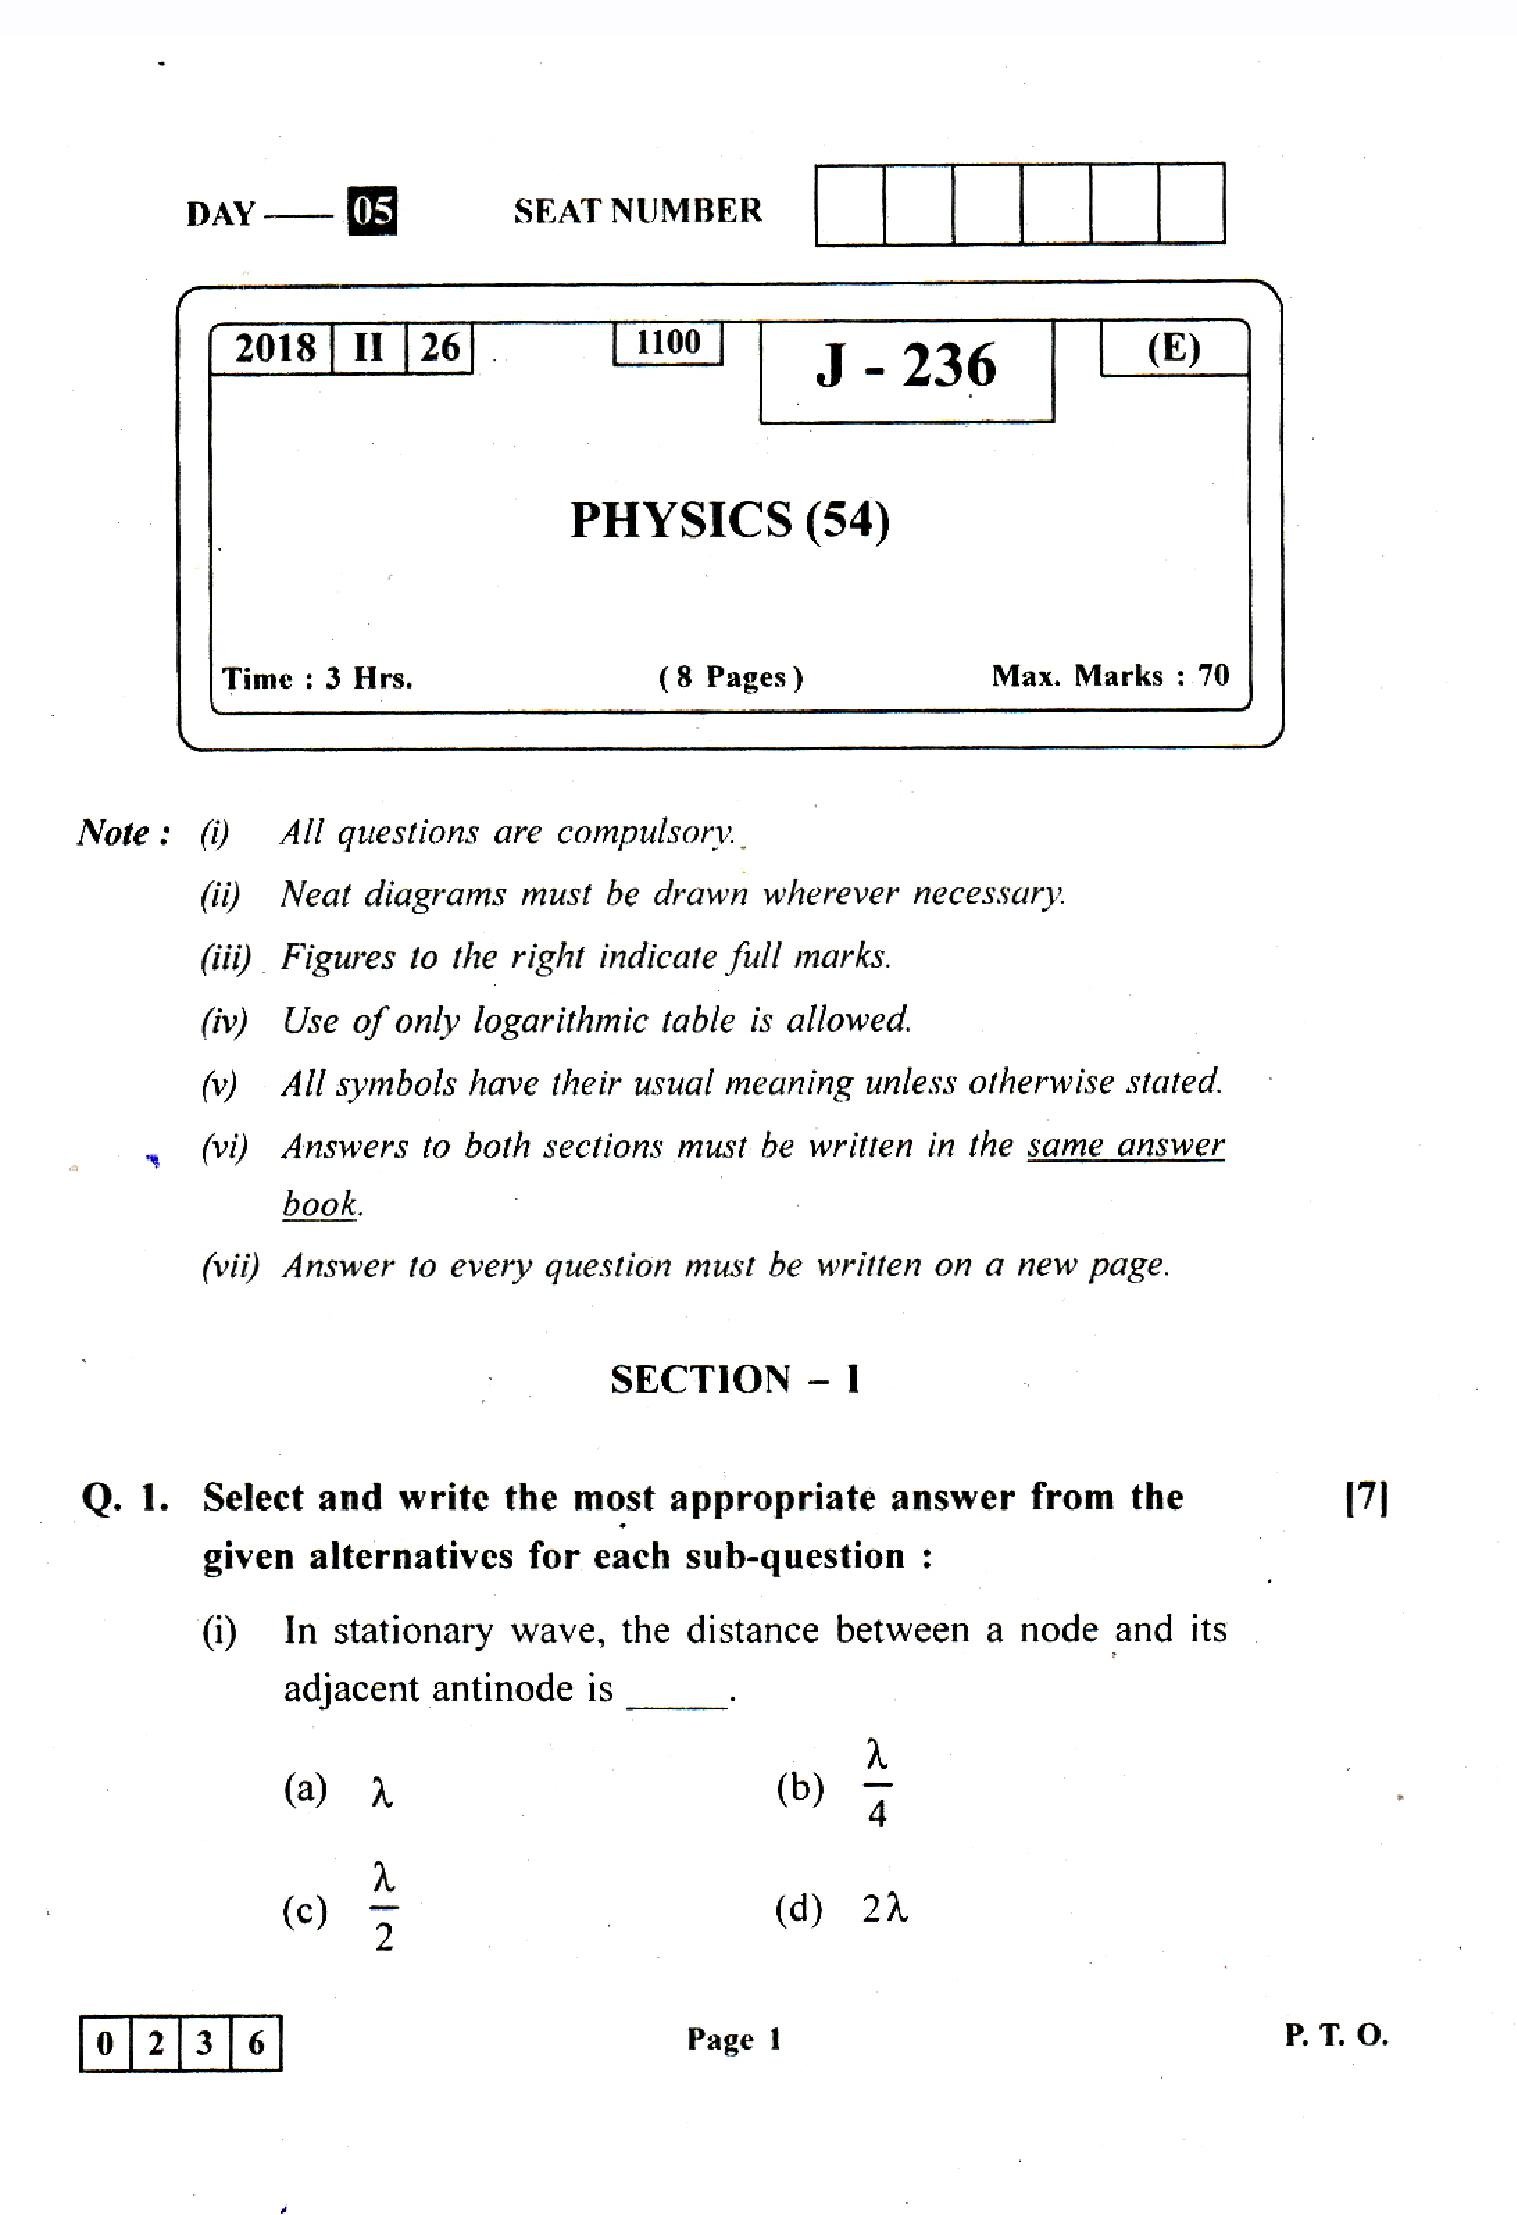 Maharashtra Class 12 Question Paper 2018 Physics - Page 1